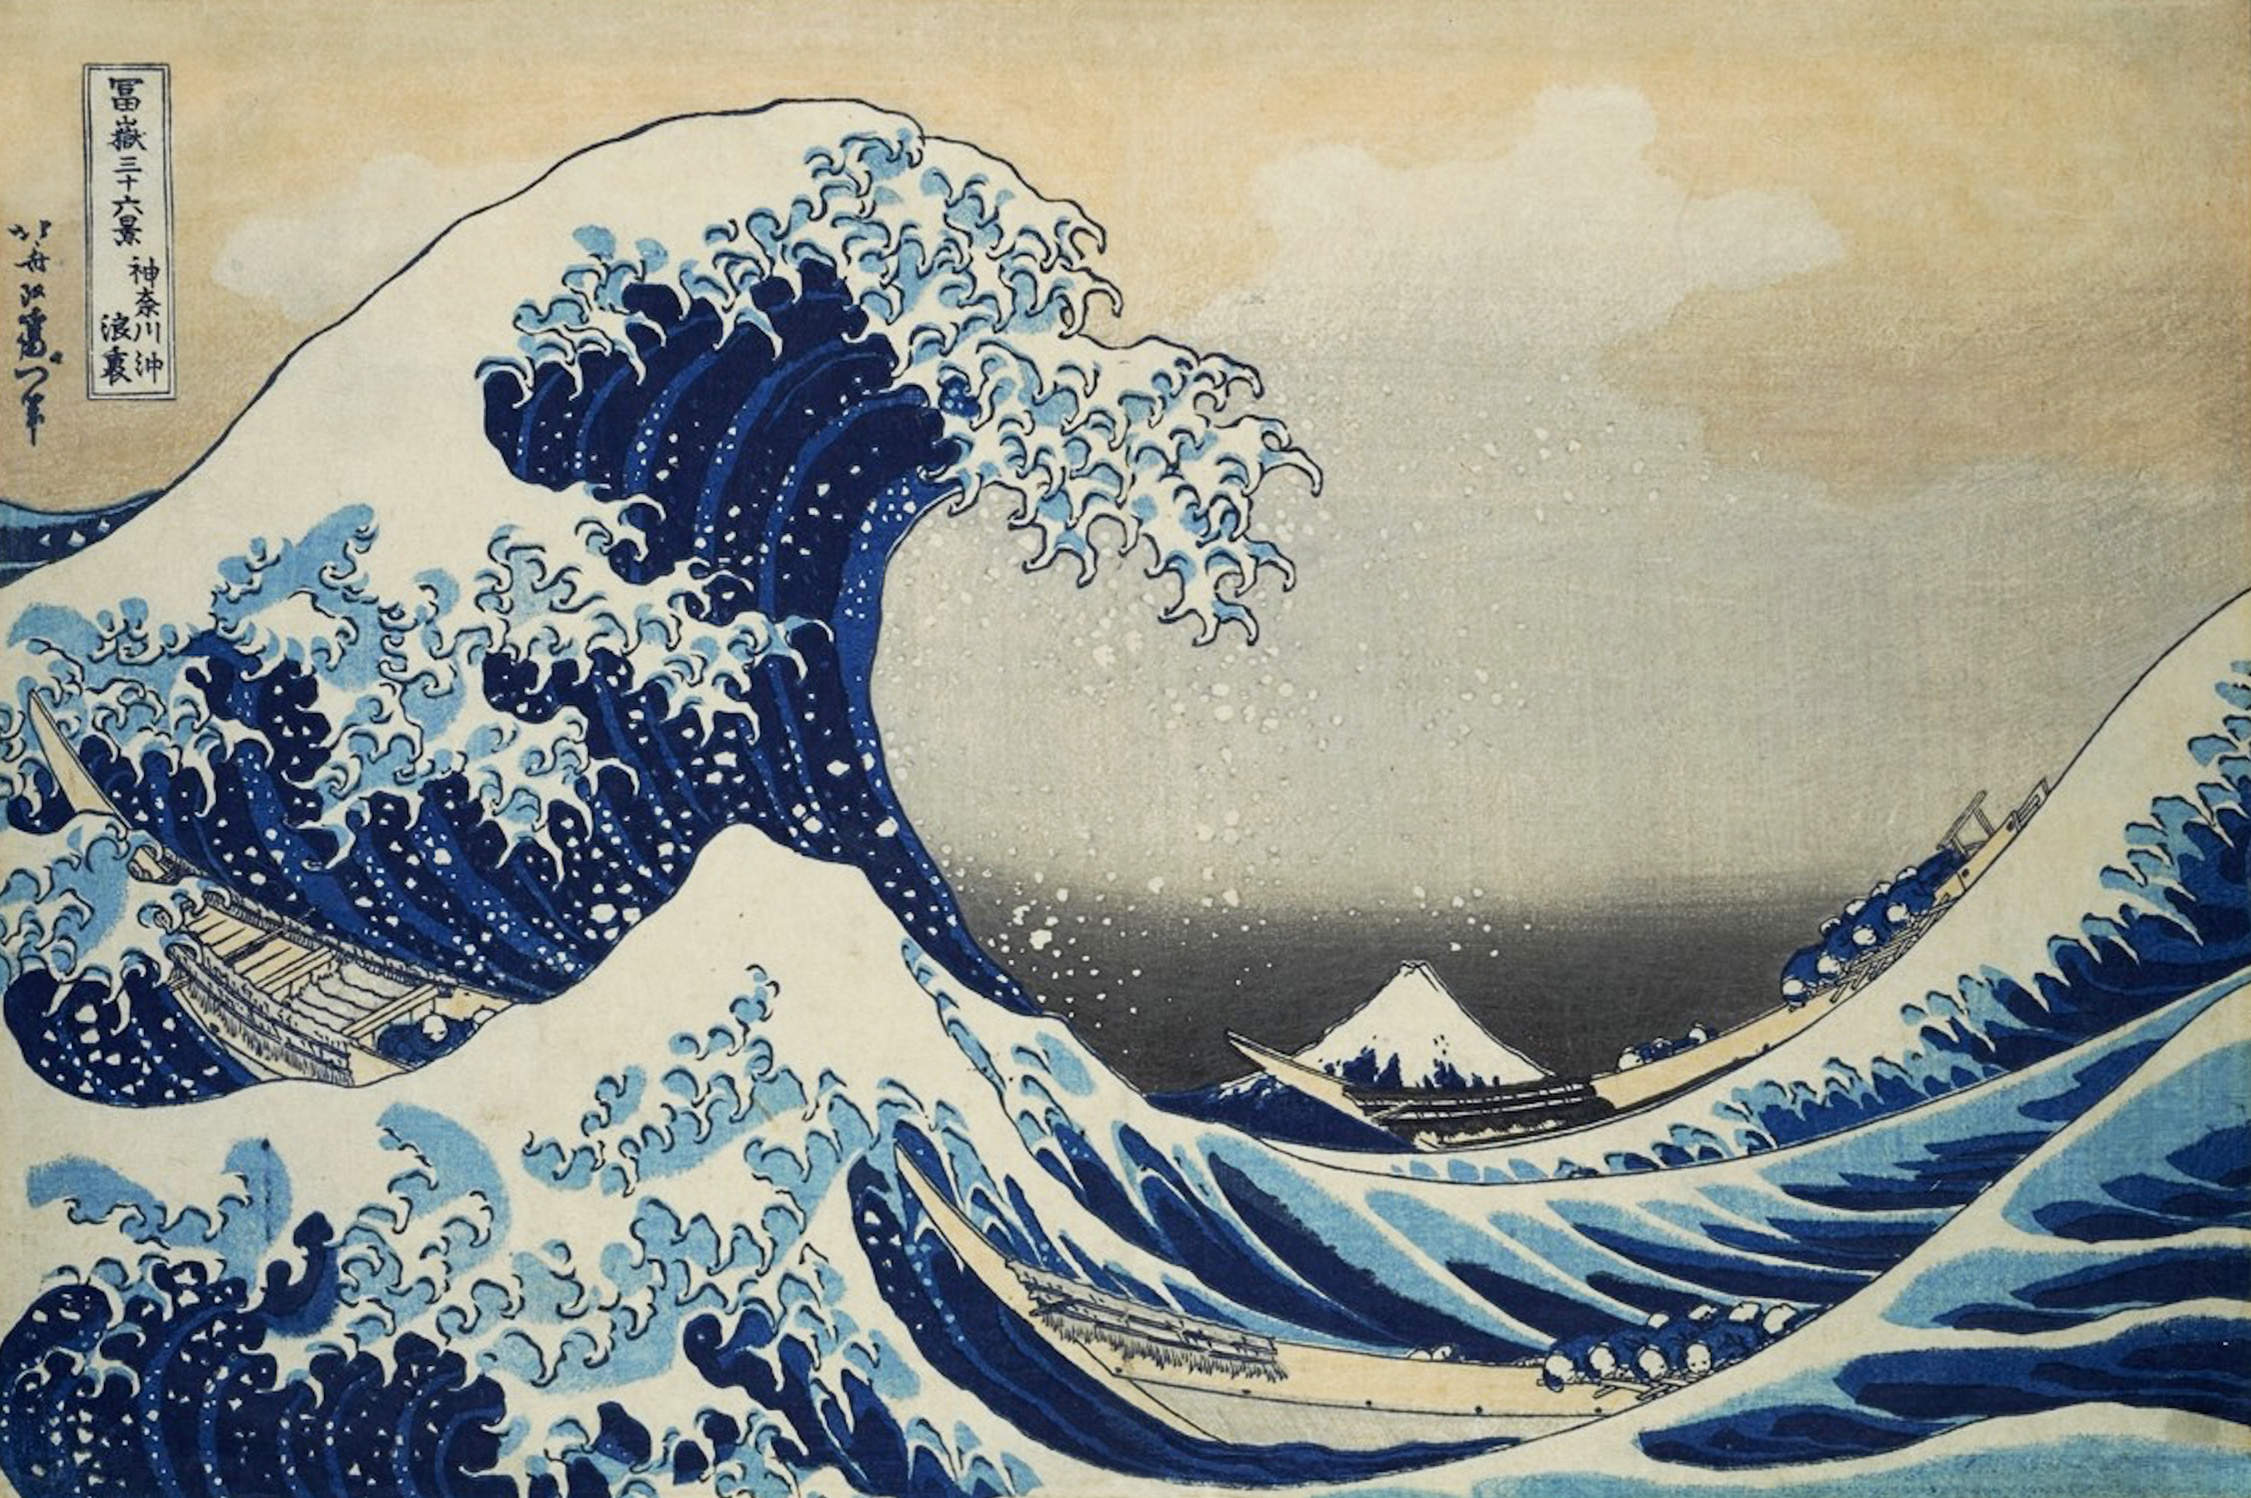 The great wave off Kanagawa, sheet 1 from the series: 36 Views of Mount Fuji. Courtesy of Museum für Kunst und Gewerbe Hamburg, Europeana